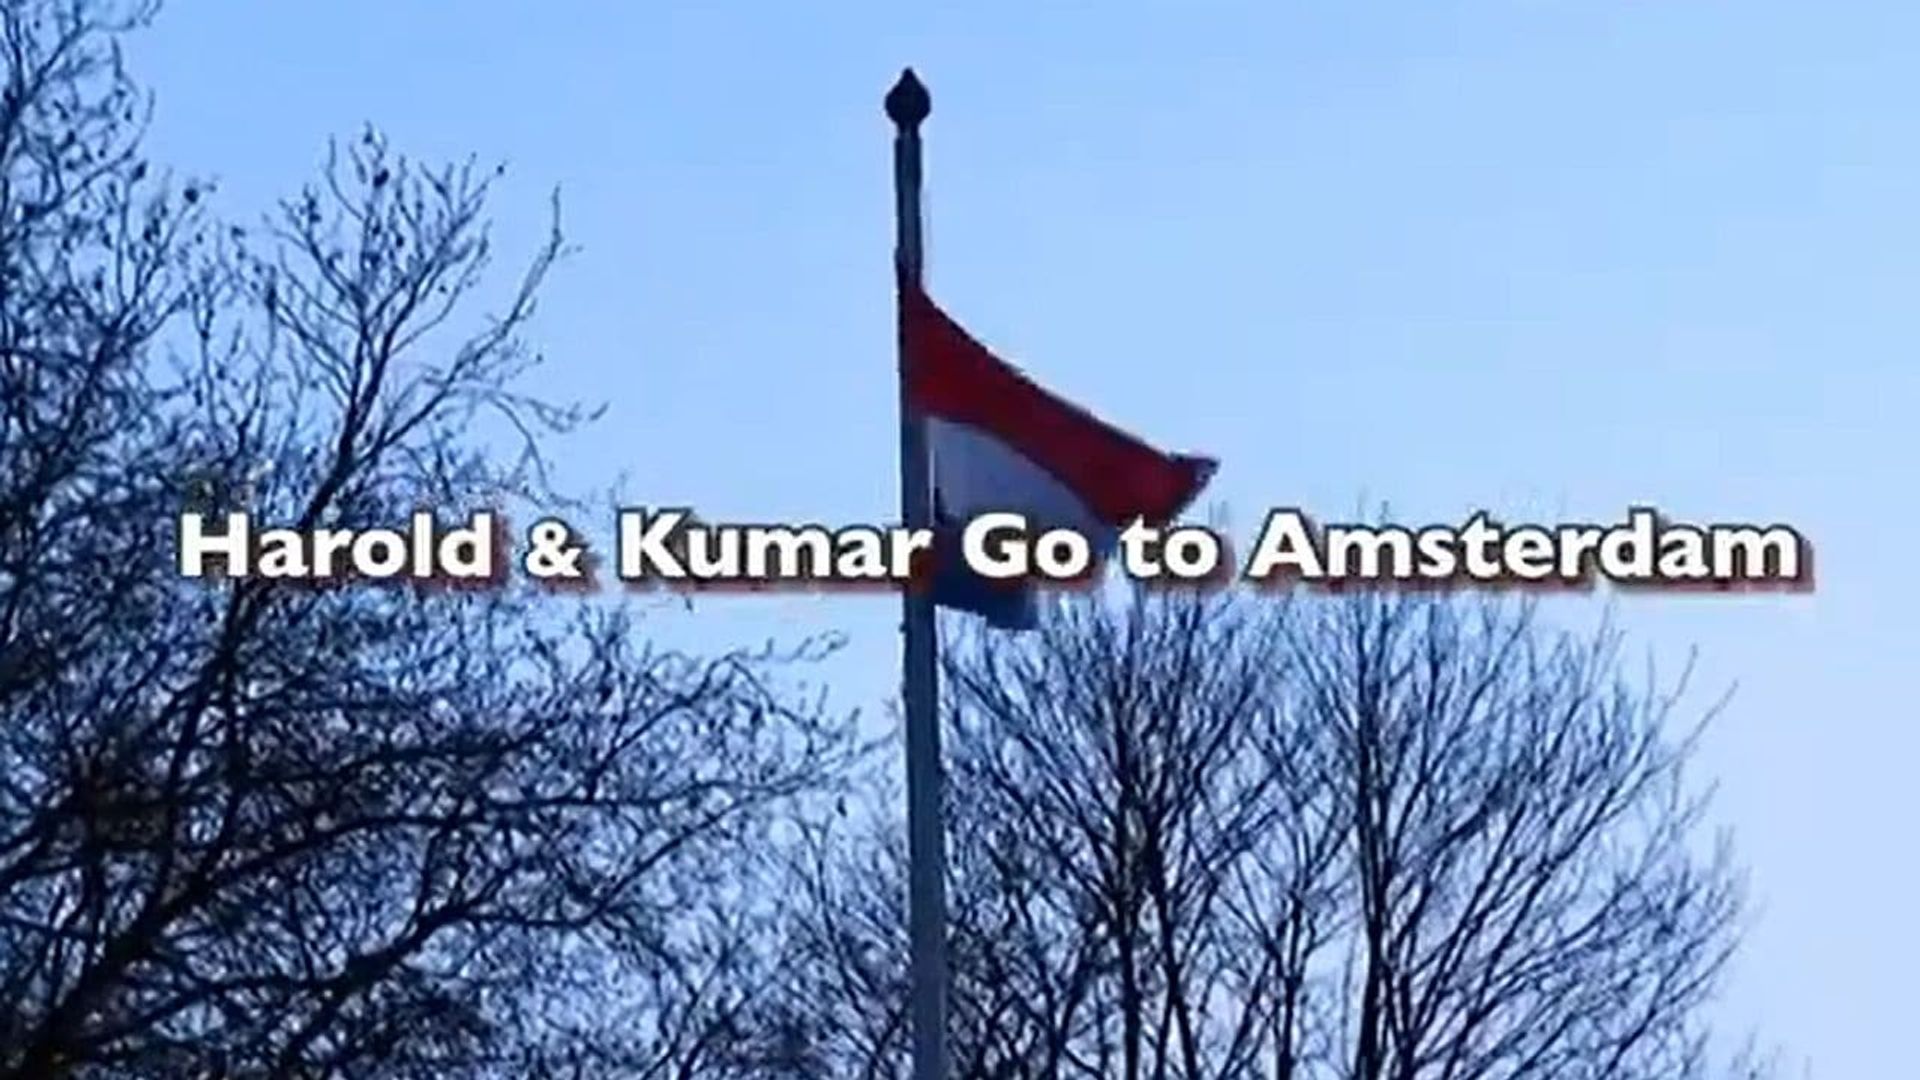 Harold & Kumar Go to Amsterdam background